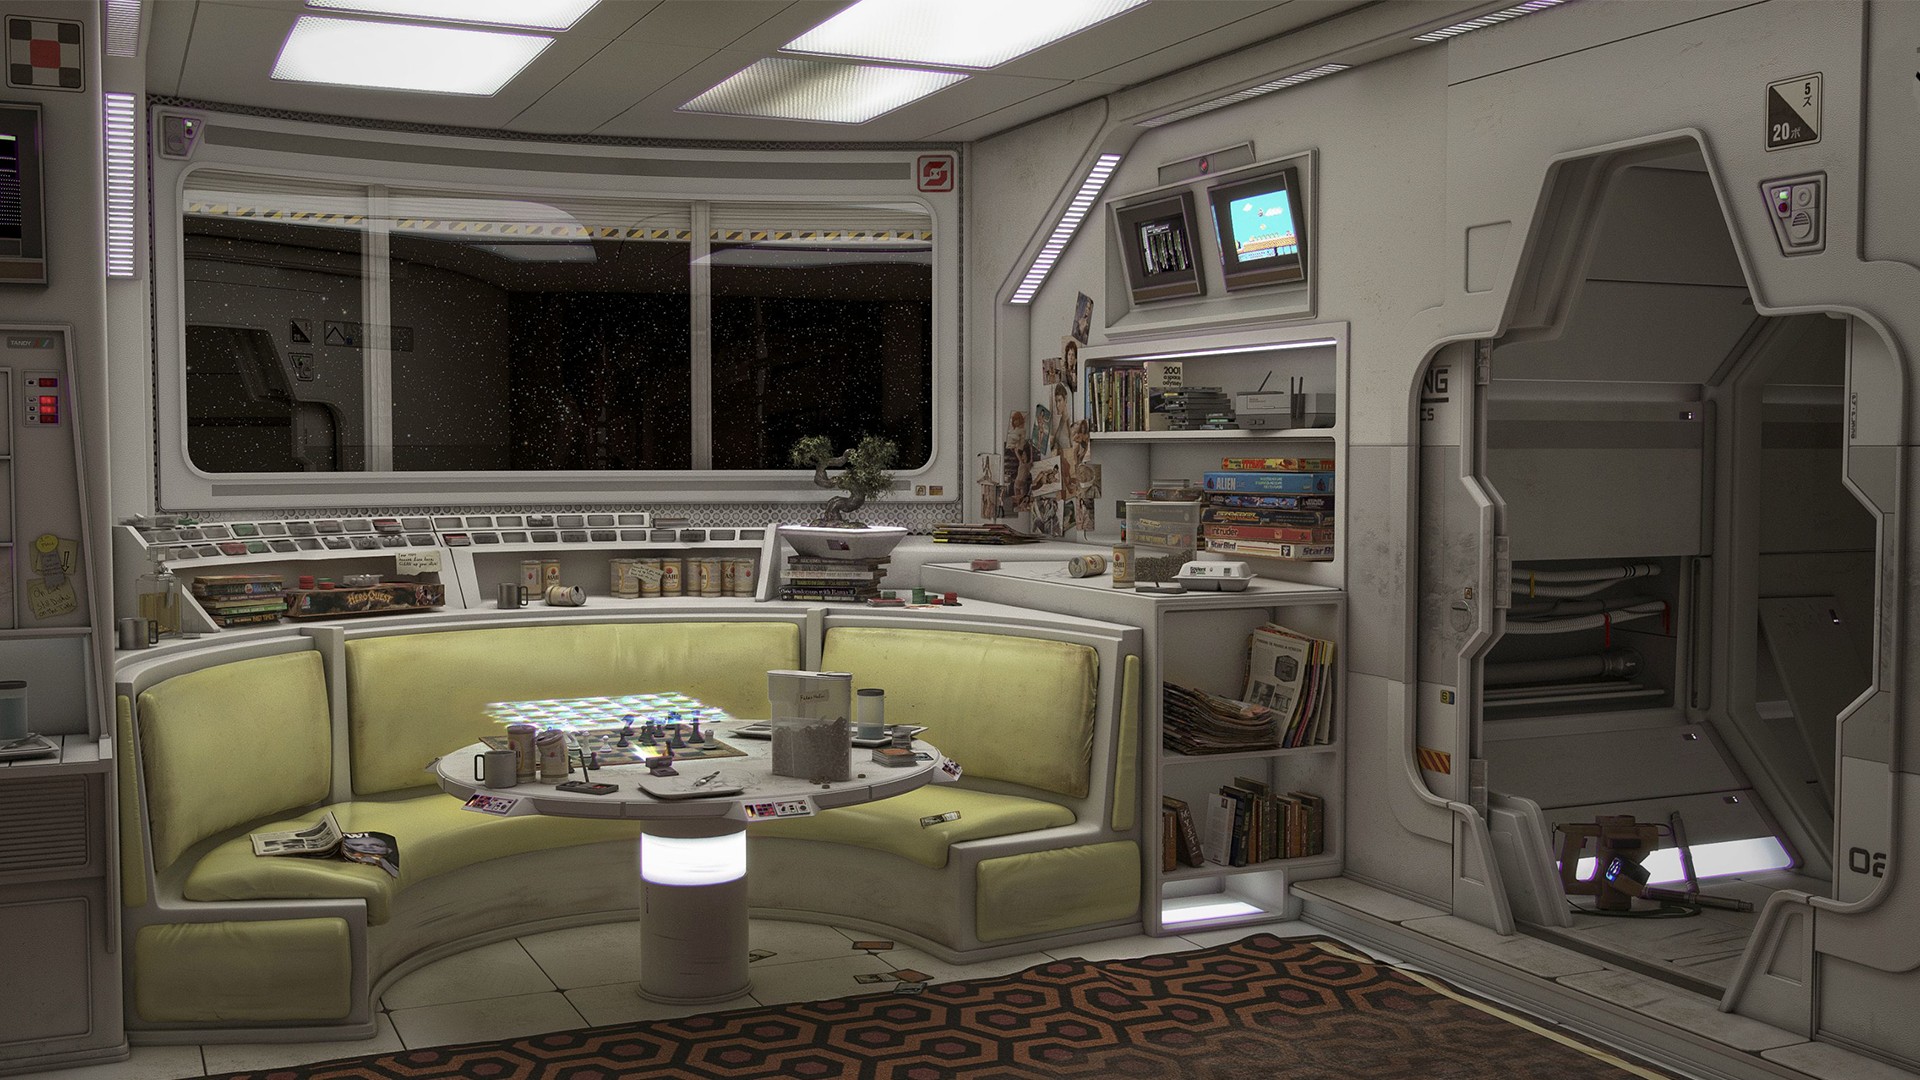 564356 Spaceship Space Stars Digital Art Science Fiction Interior Space Art Futuristic Nintendo Entertainment System 